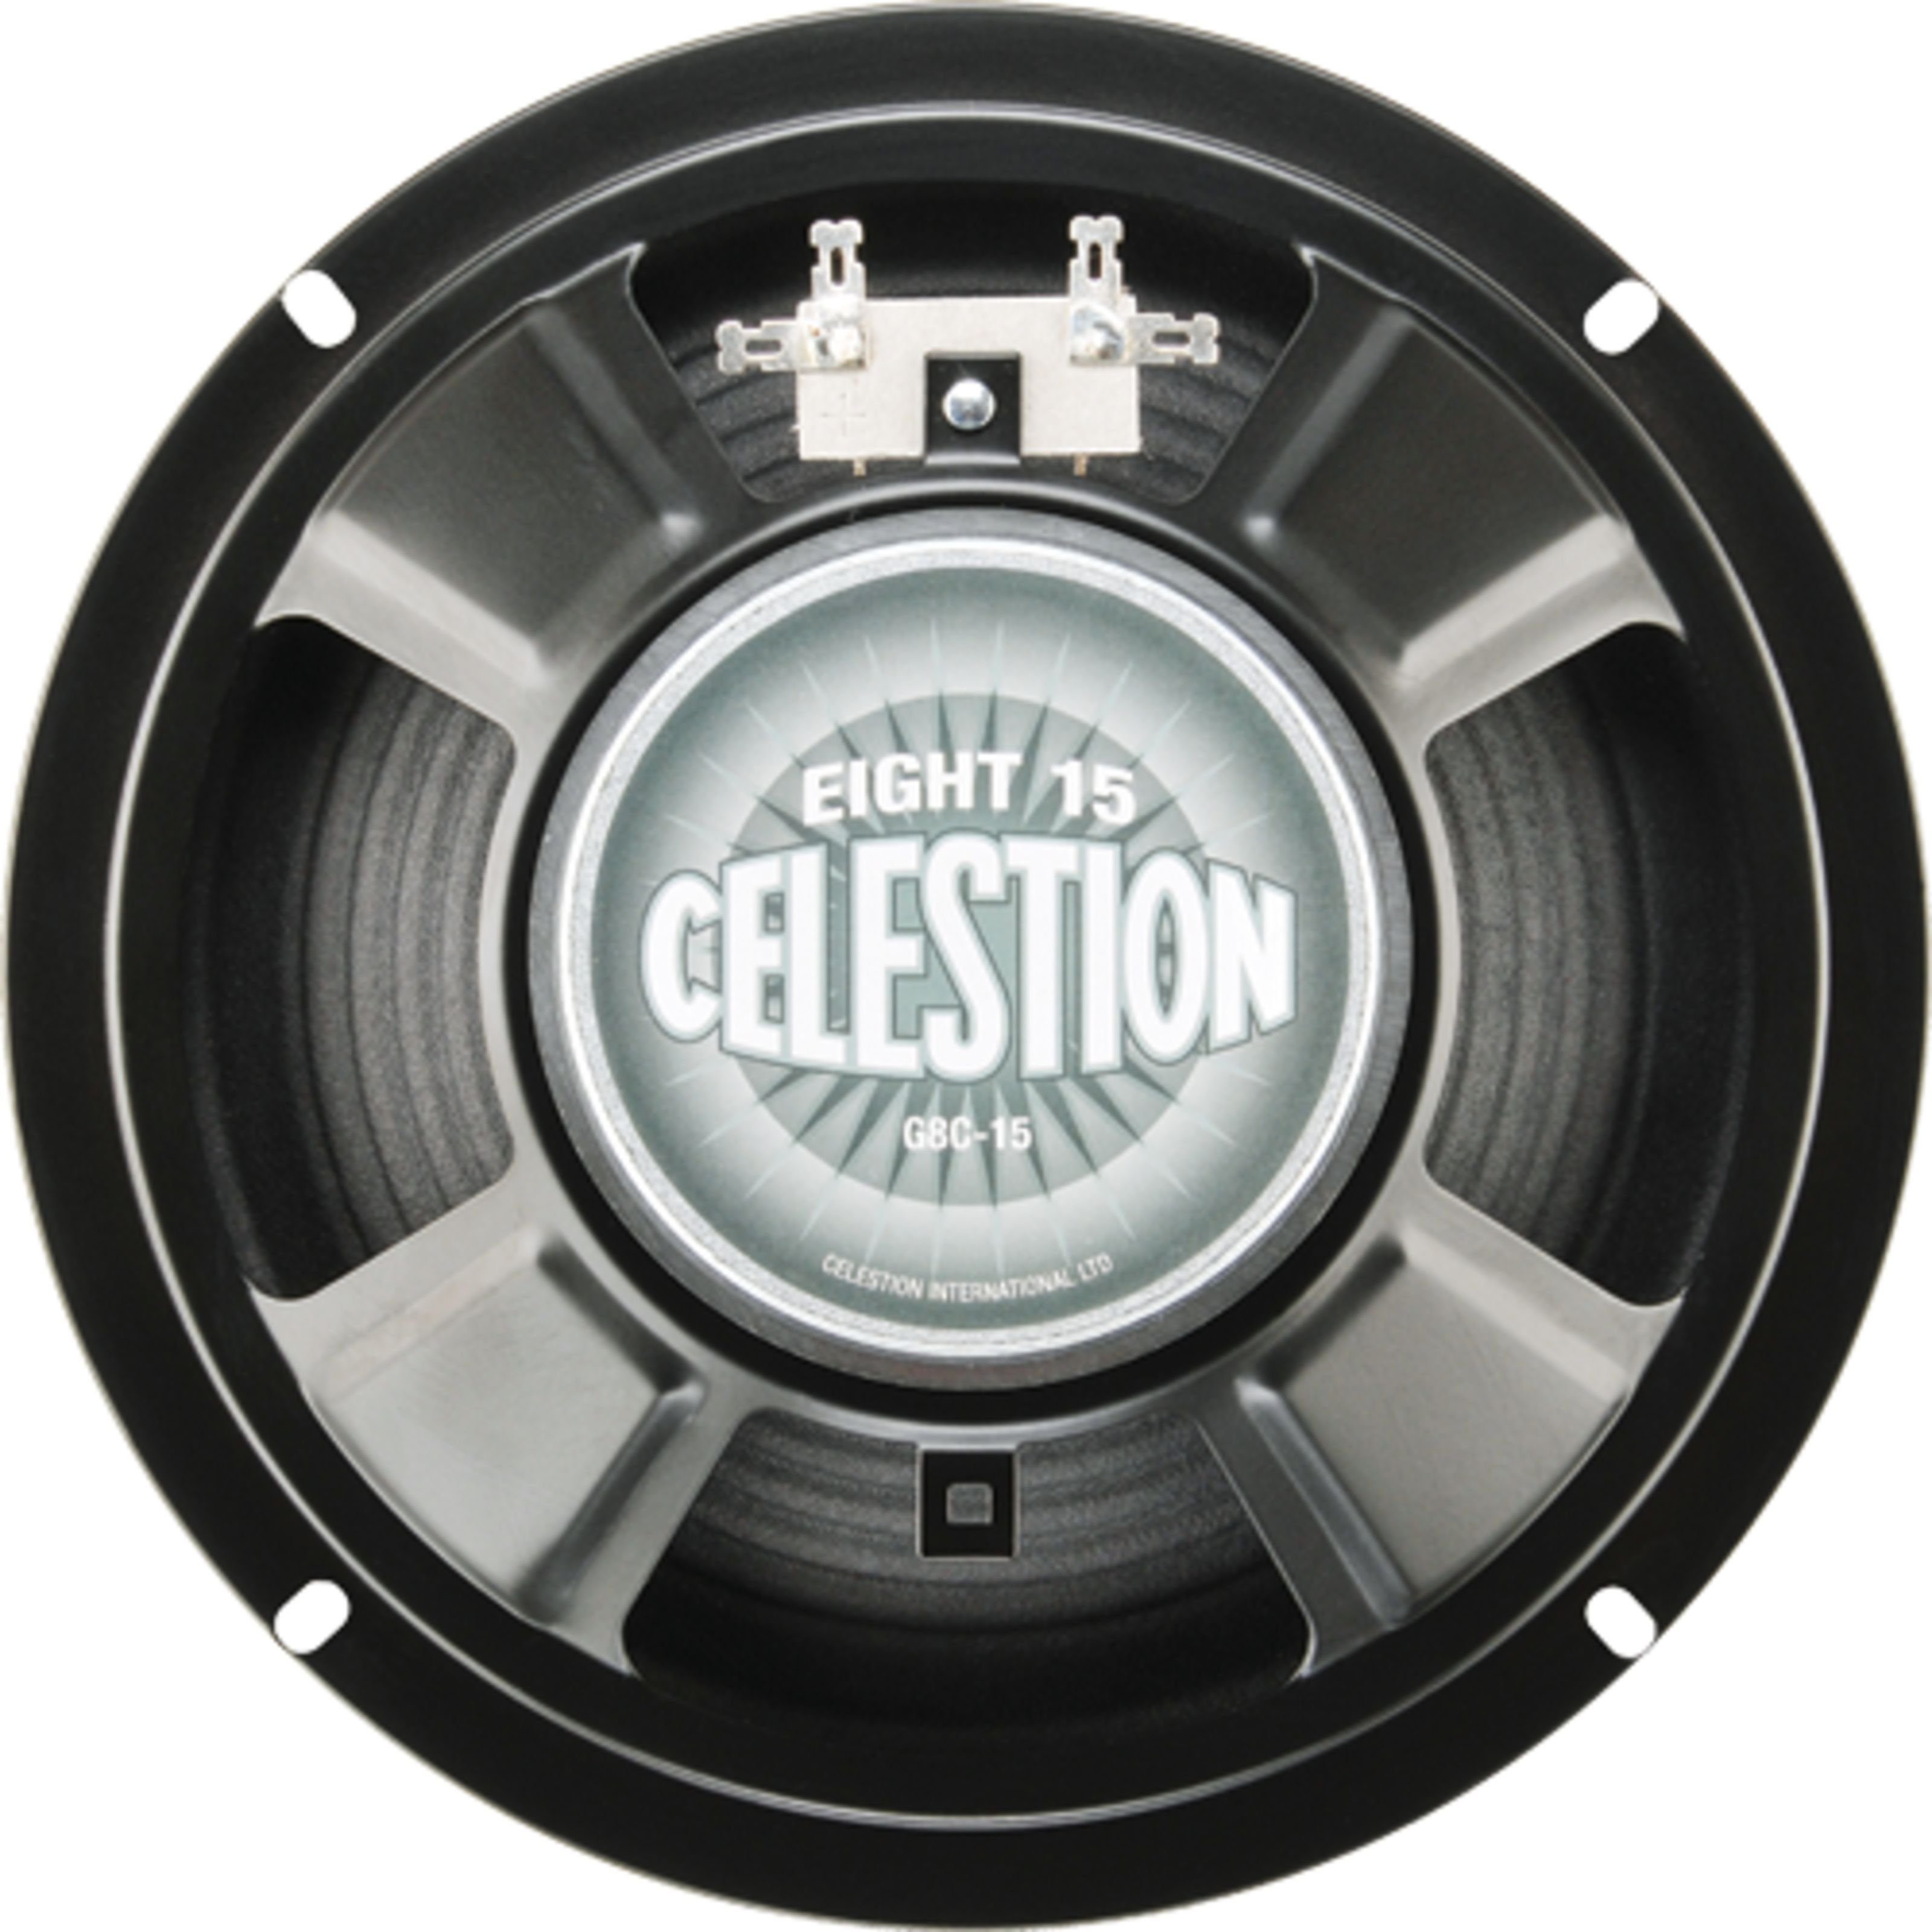 Celestion Lautsprecher (Eight 15 8" 8 Ohm - Gitarrenlautsprecher)